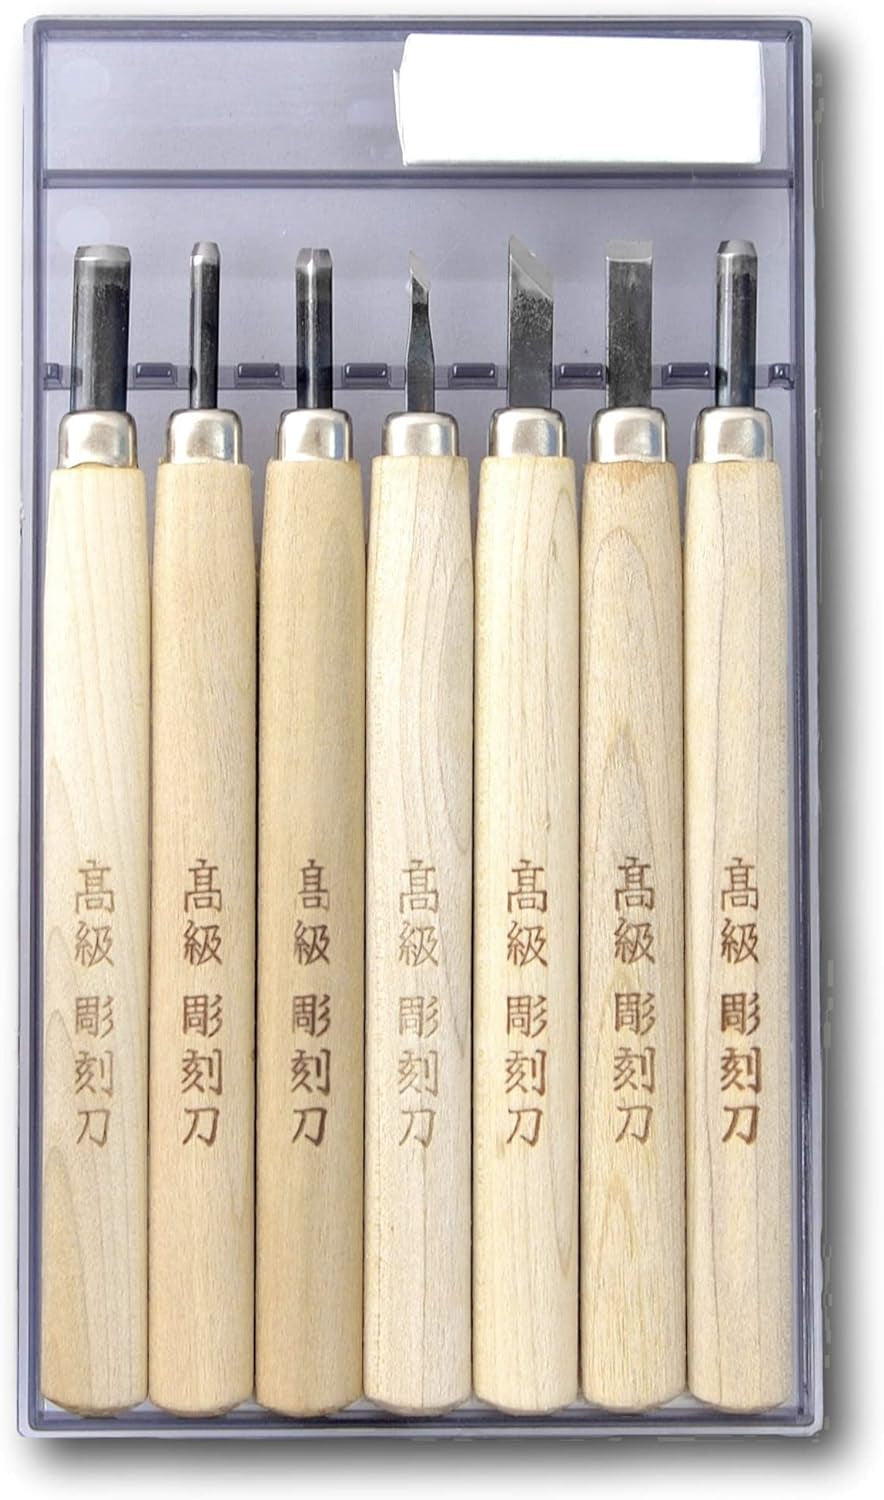 Japanese Wood Carving Tools Set for Beginners (7 Pcs) Made in JAPAN, Wood Carving Knife for Woodblock Printing, Woodcut Printmaking, Linoleum Carving, Linocut